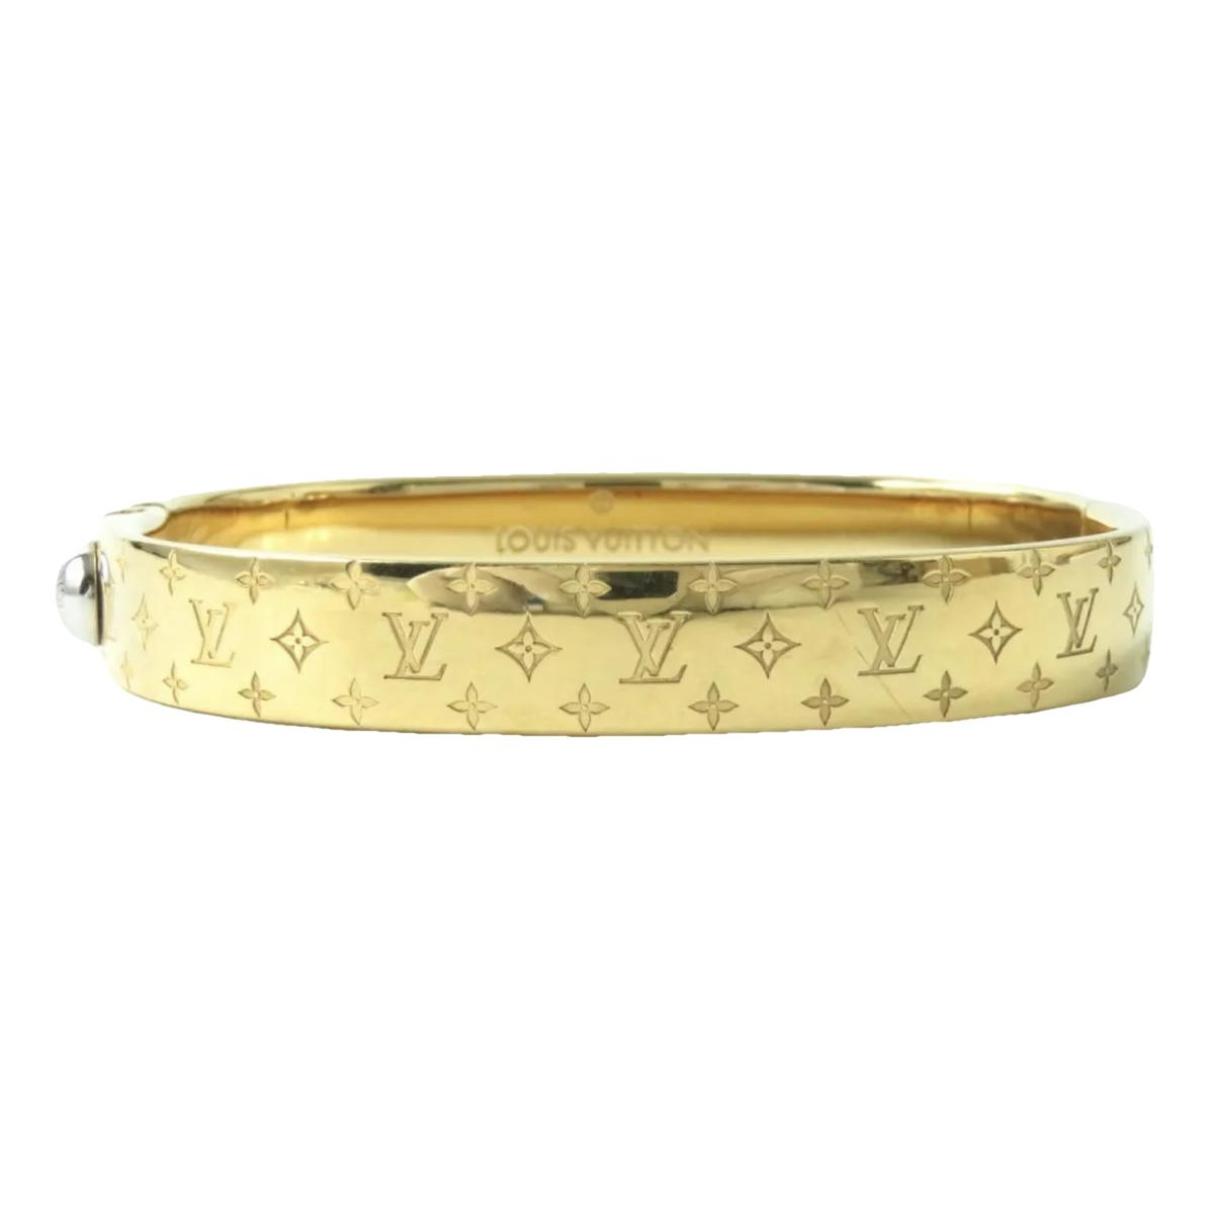 Nanogram bracelet Louis Vuitton Gold in Gold plated - 35348842